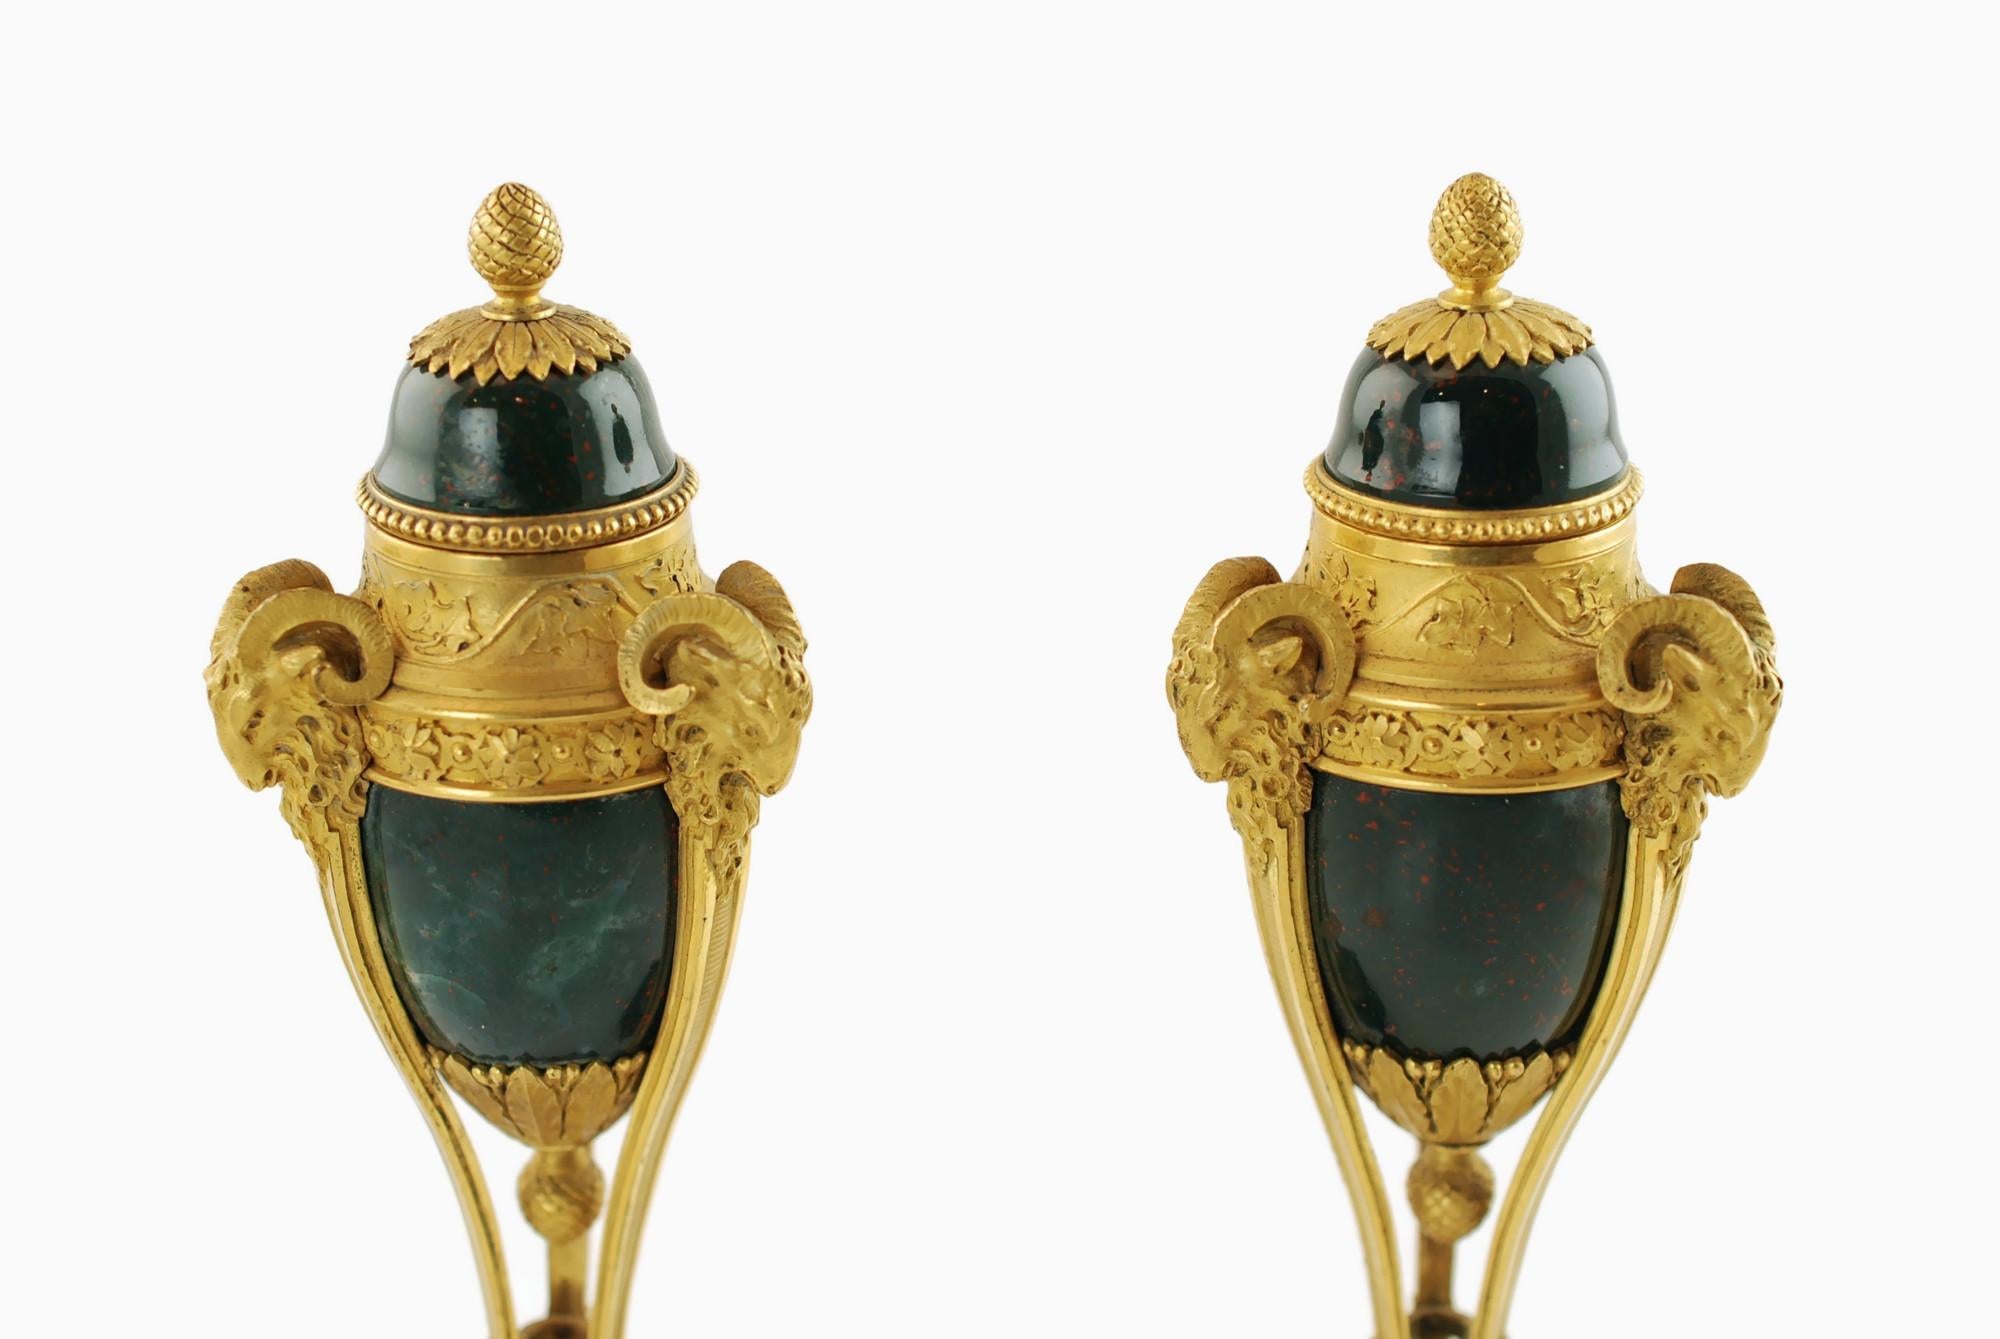 19th C Bloodstone Cassolettes with Ormolu Mounts Rams Head Motif Louis XVI Style For Sale 8